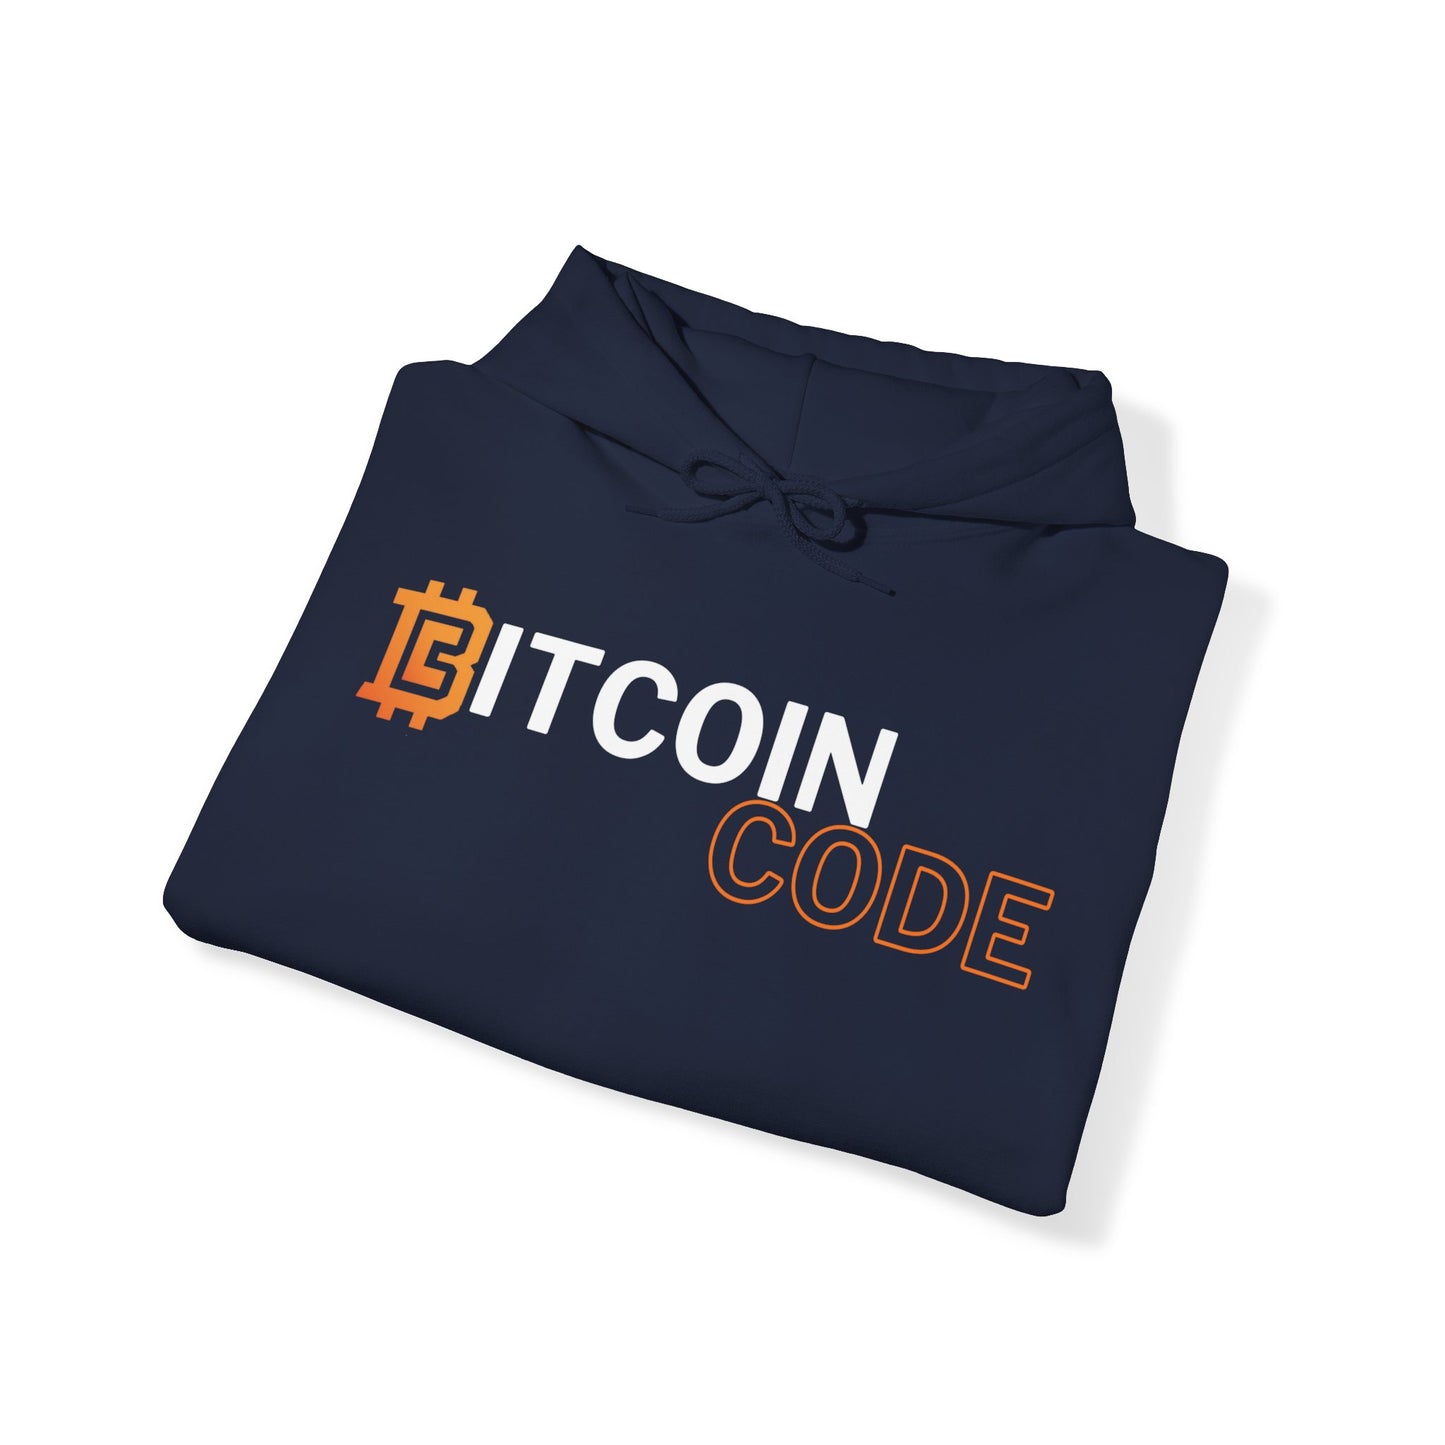 Bitcoincode Classic Unisex Hoodie